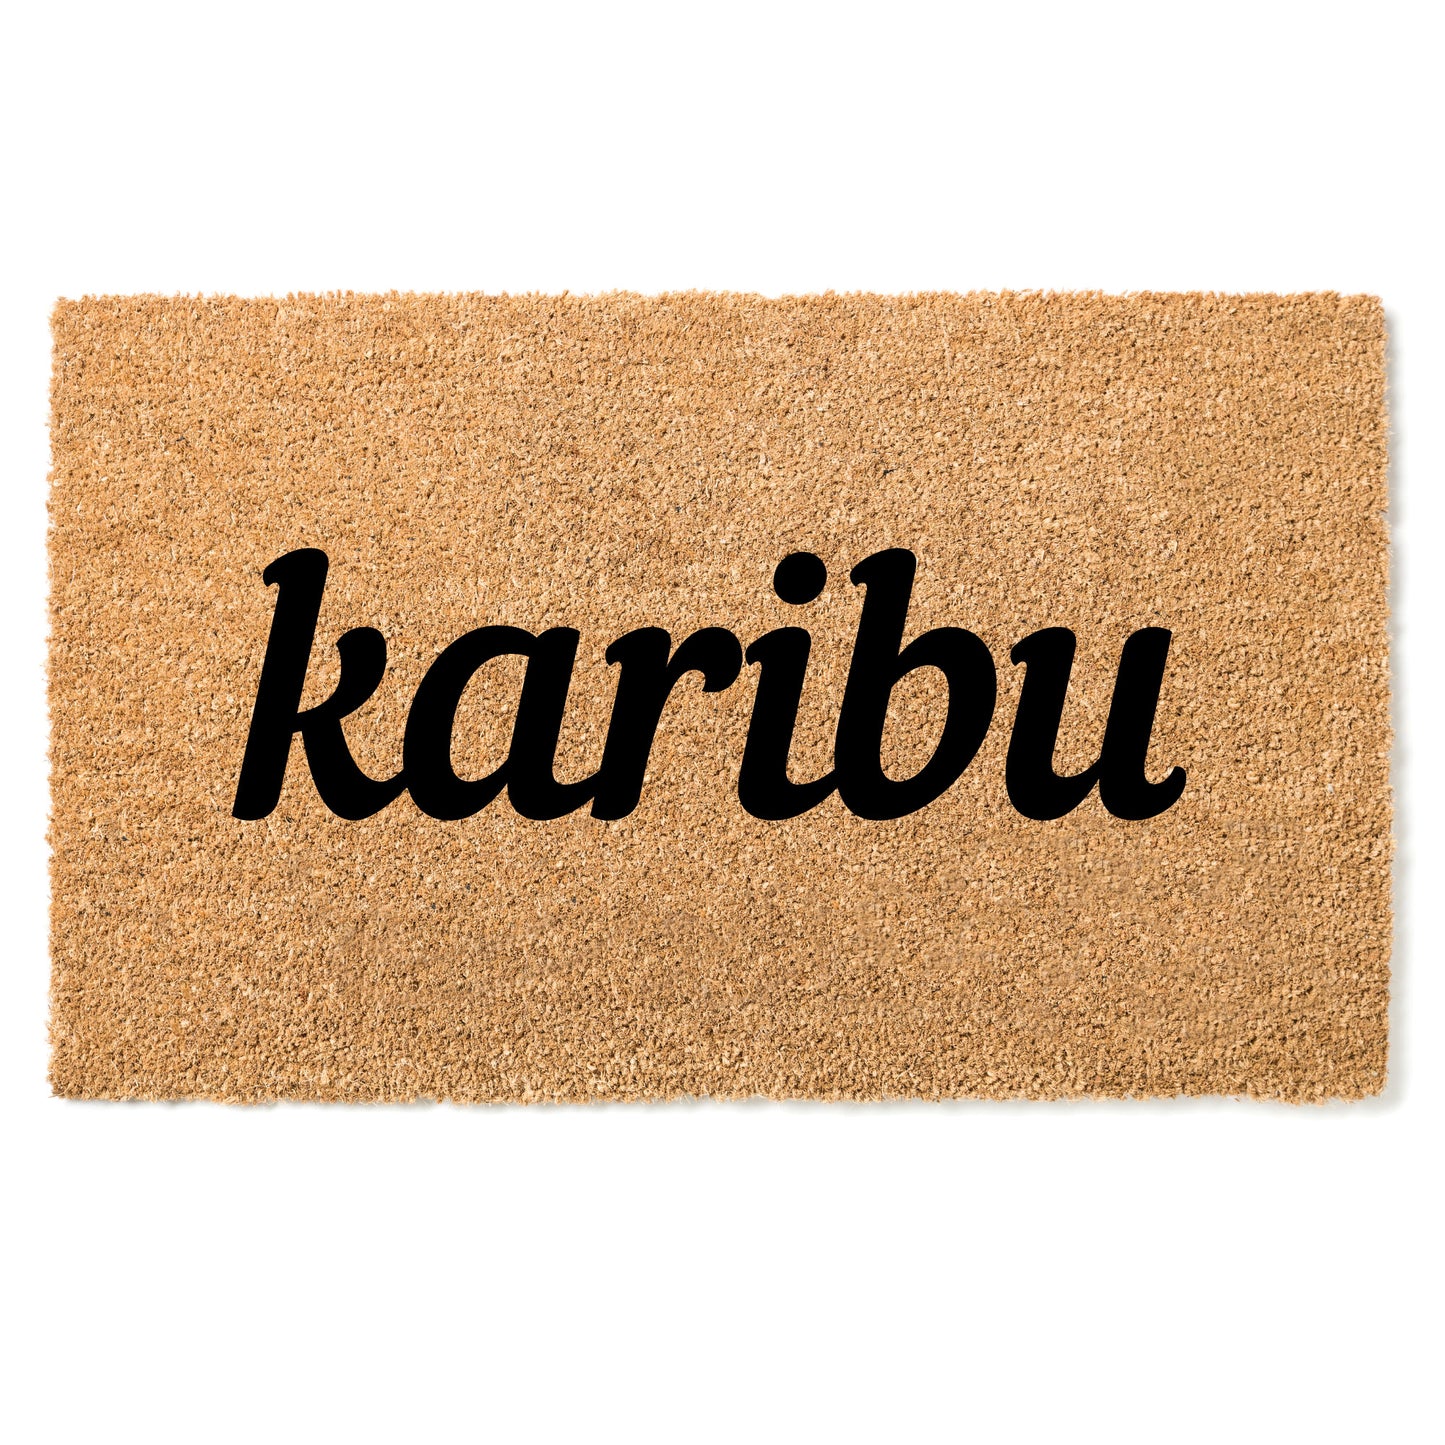 Paillasson Karibu - "Bienvenue" en Kiswahili, Shimaoré, Shikomori